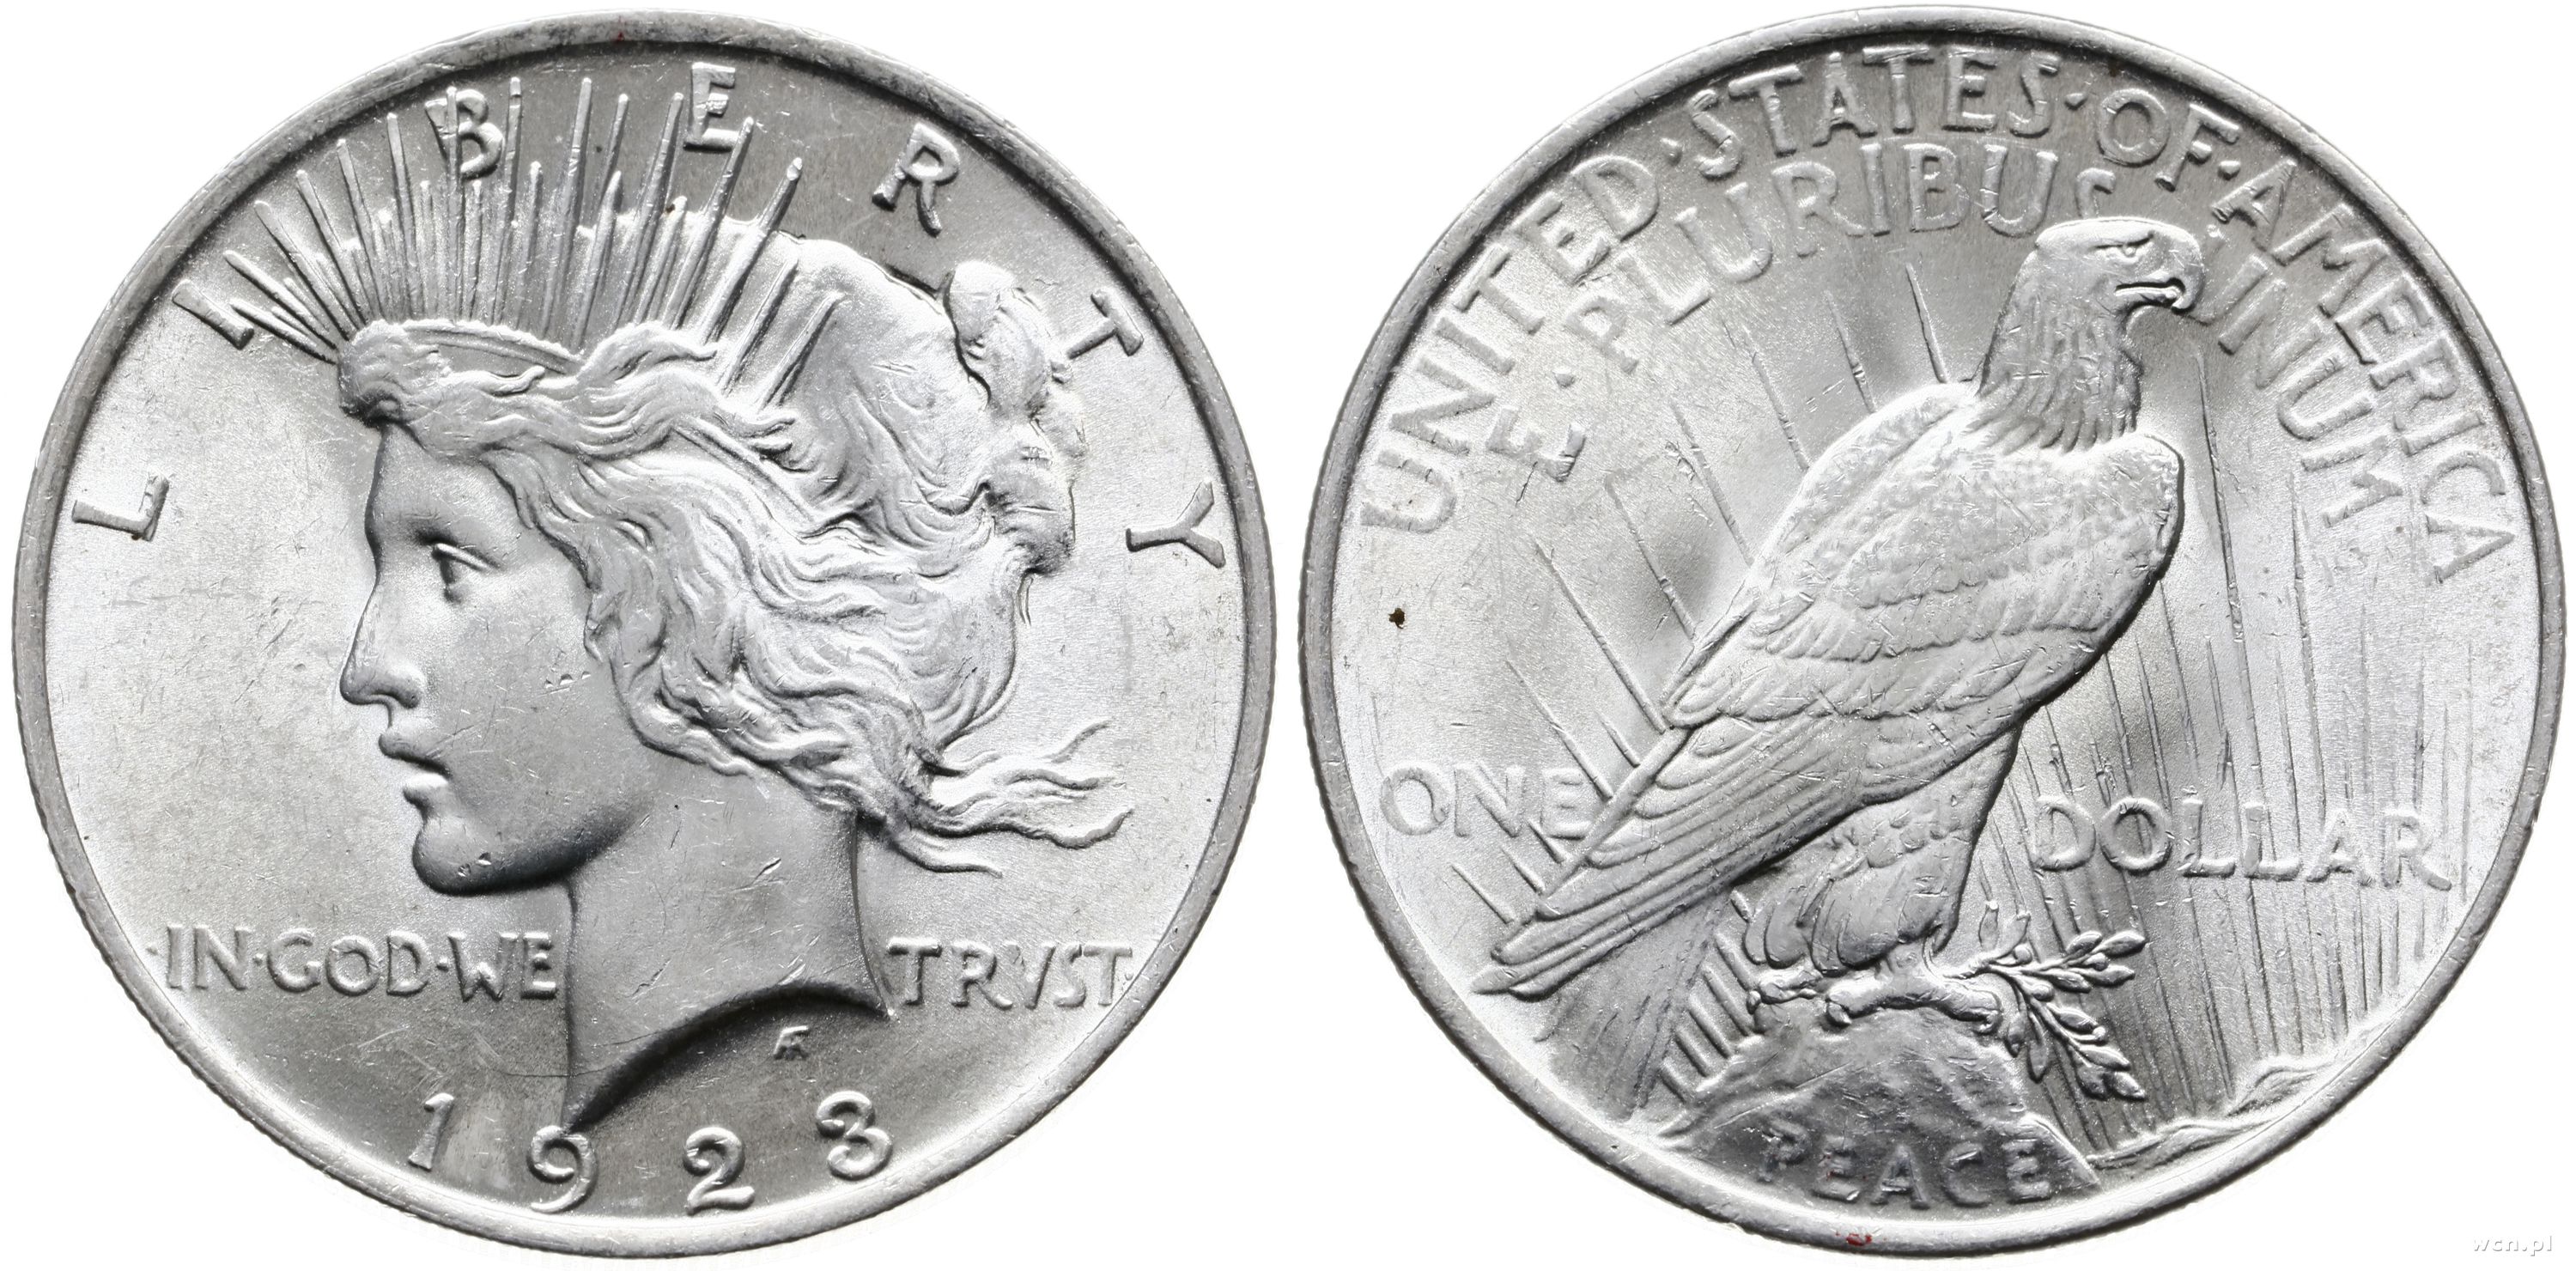 1 серебряный доллар. Liberty 1922 монета. 1 Доллар США серебро. Монета Либерти 1921. Американский серебрянный доллар Либерти.